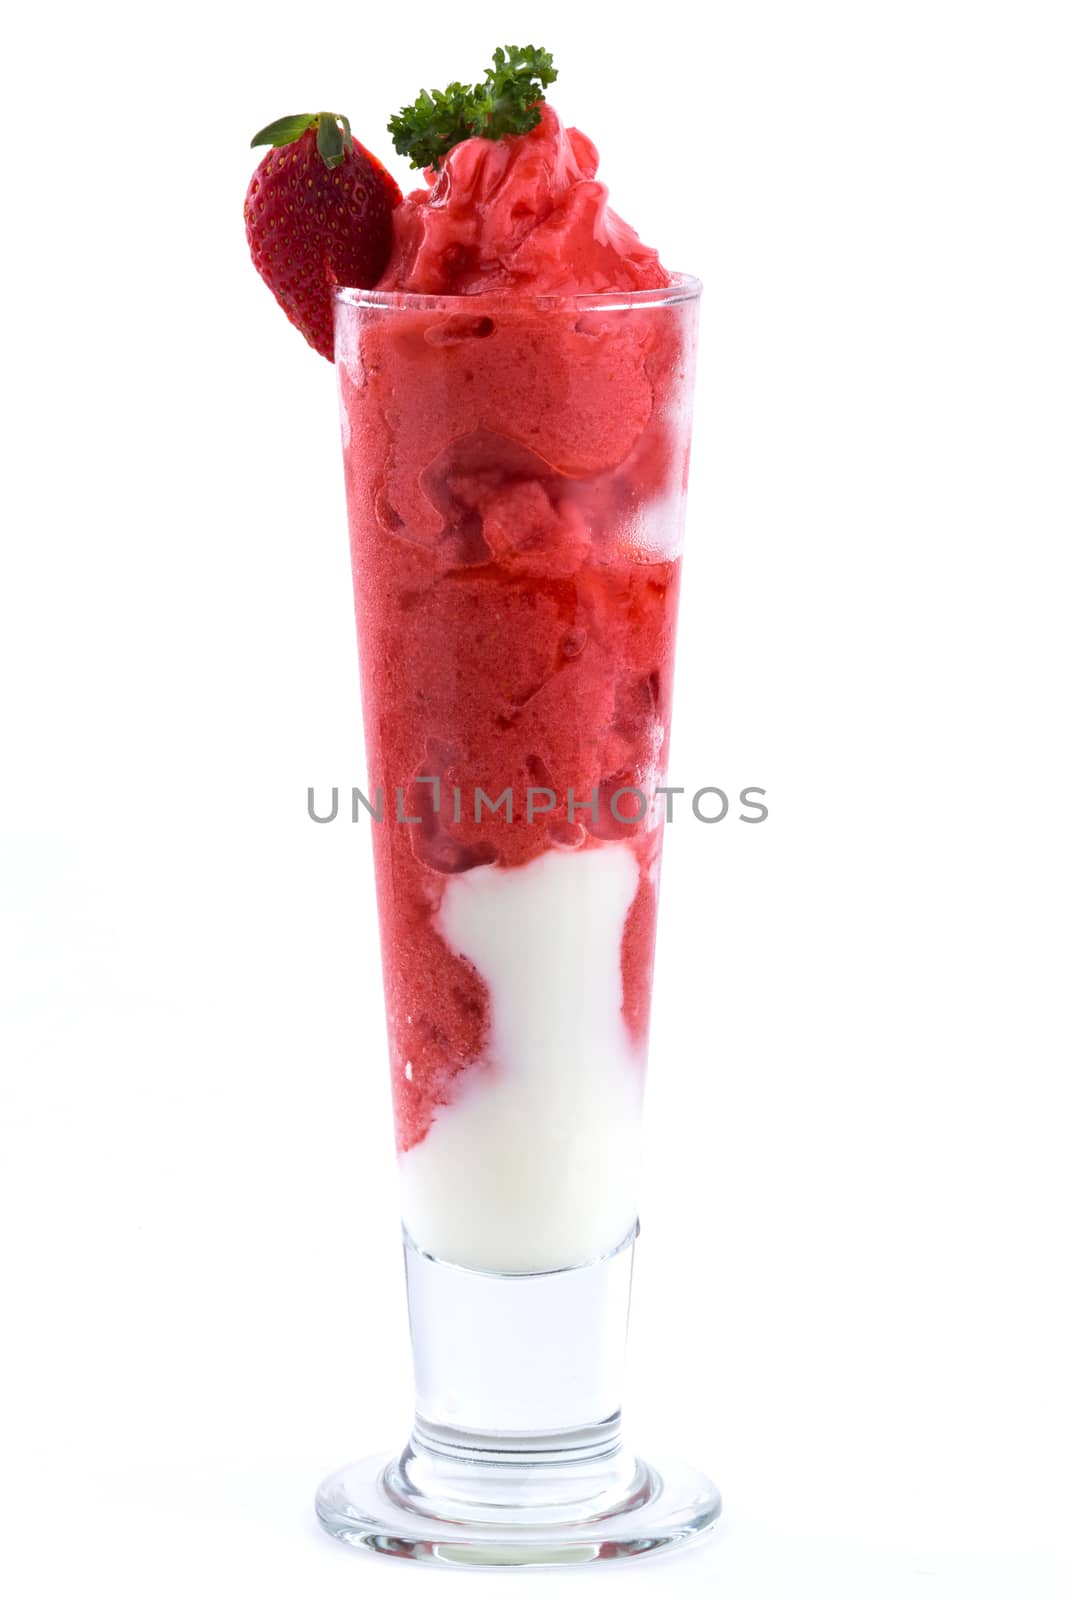 strawberry smoothies on white background